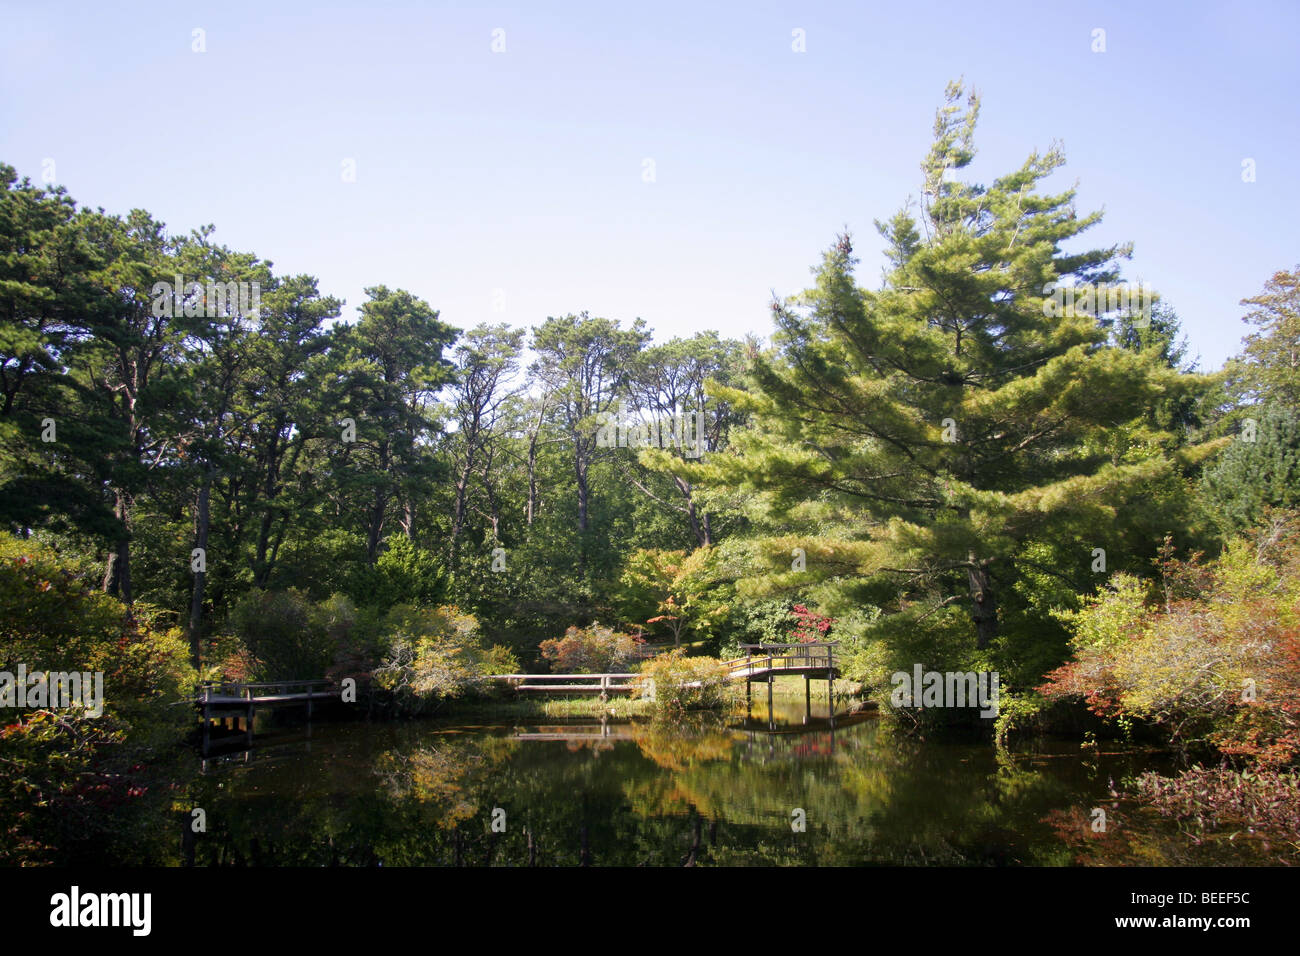 Mytoi giardini Giapponesi, Chappaquiddick island, Martha's Vineyard, Cape Cod, New England, Massachusetts, STATI UNITI D'AMERICA Foto Stock